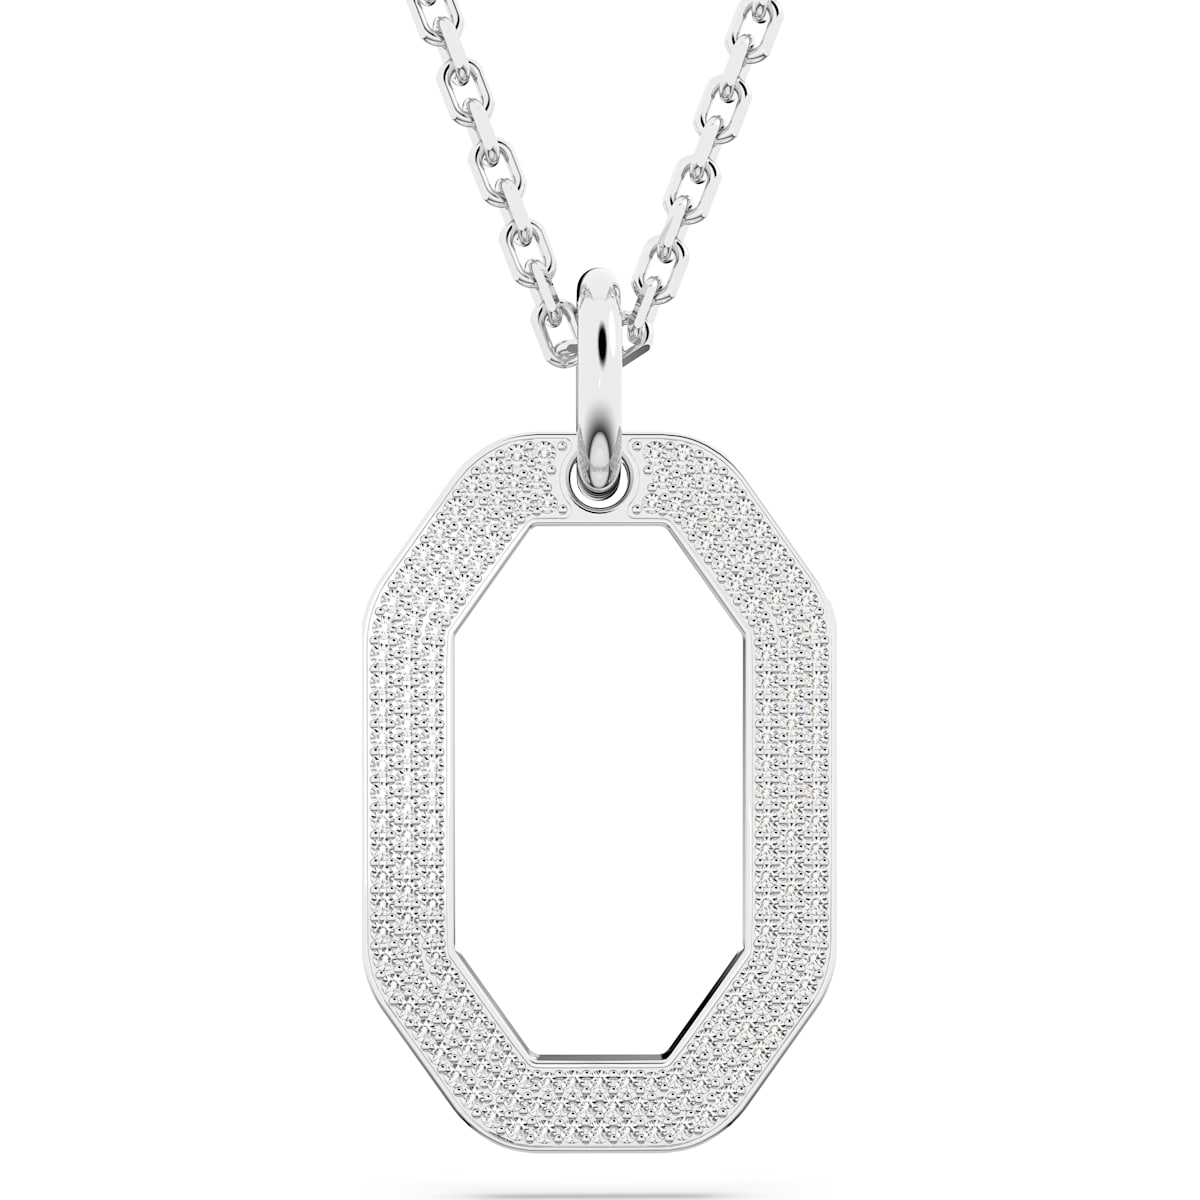 Swarovski Dextera pendant, Octagon shape, White, Rhodium plated 5642388- Discontinued